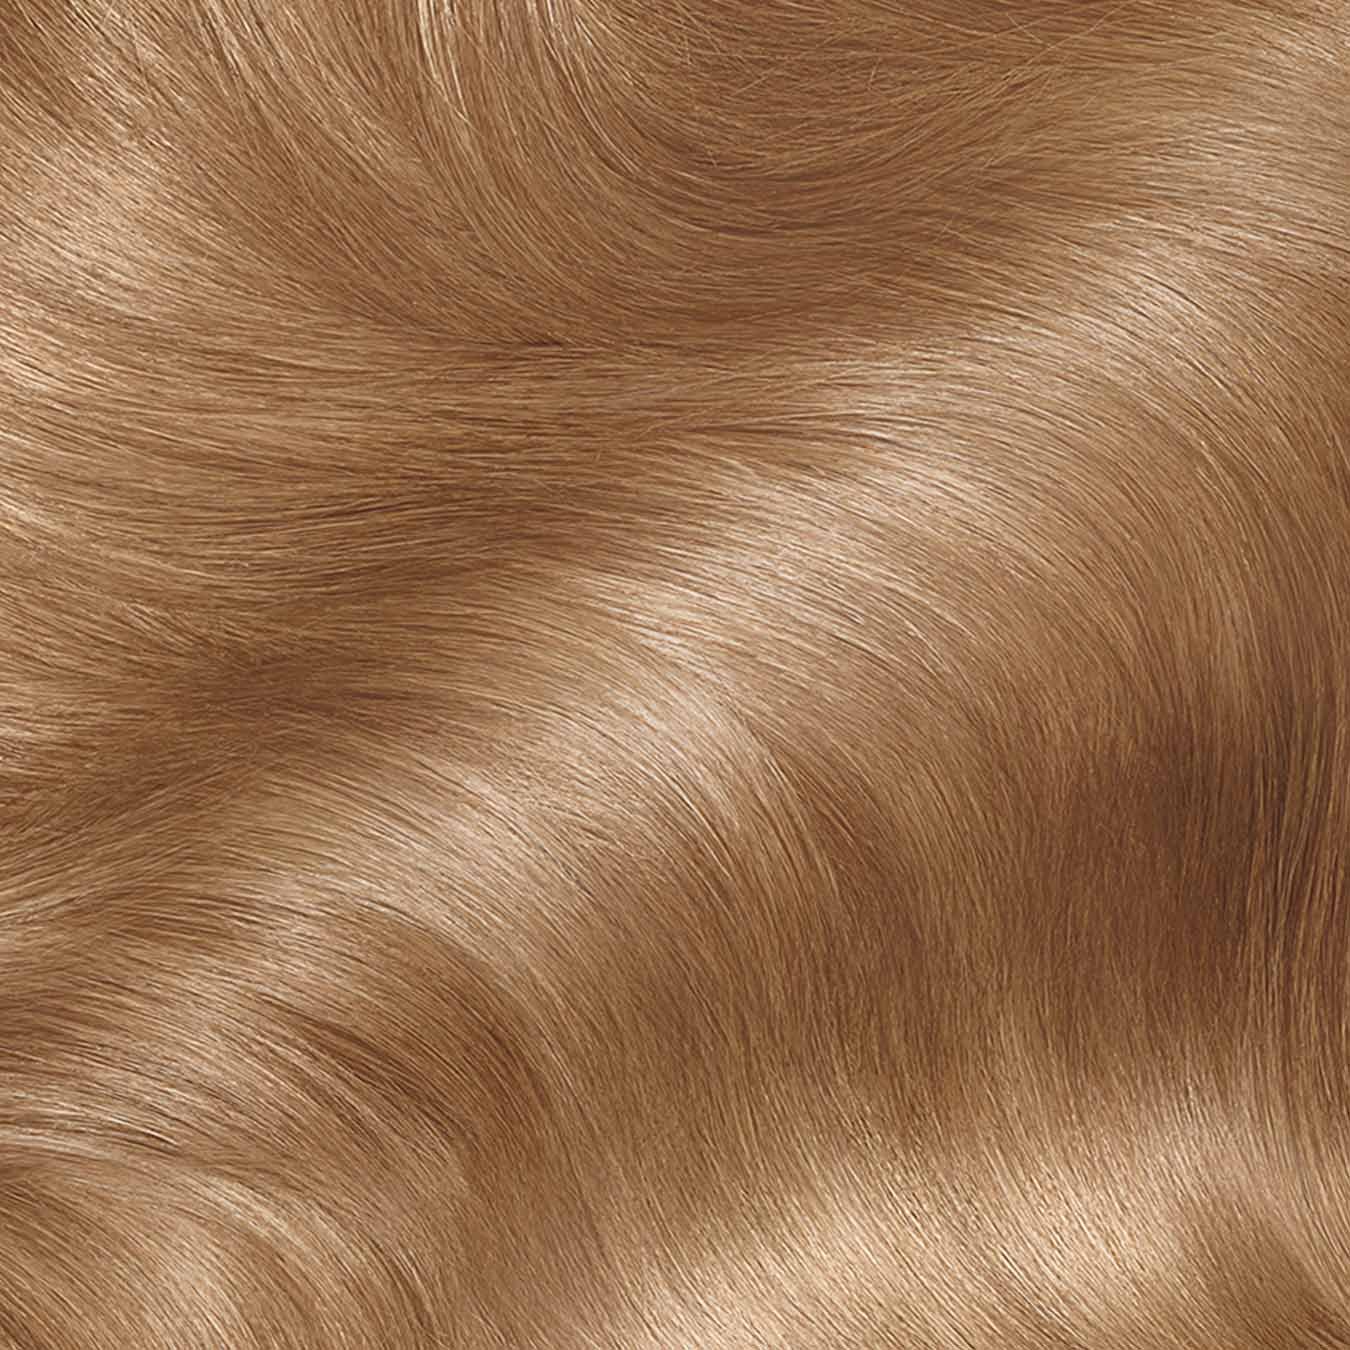 Garnier Color Sensation 7.0 - Dark Natural Blonde Permanent Hair Color